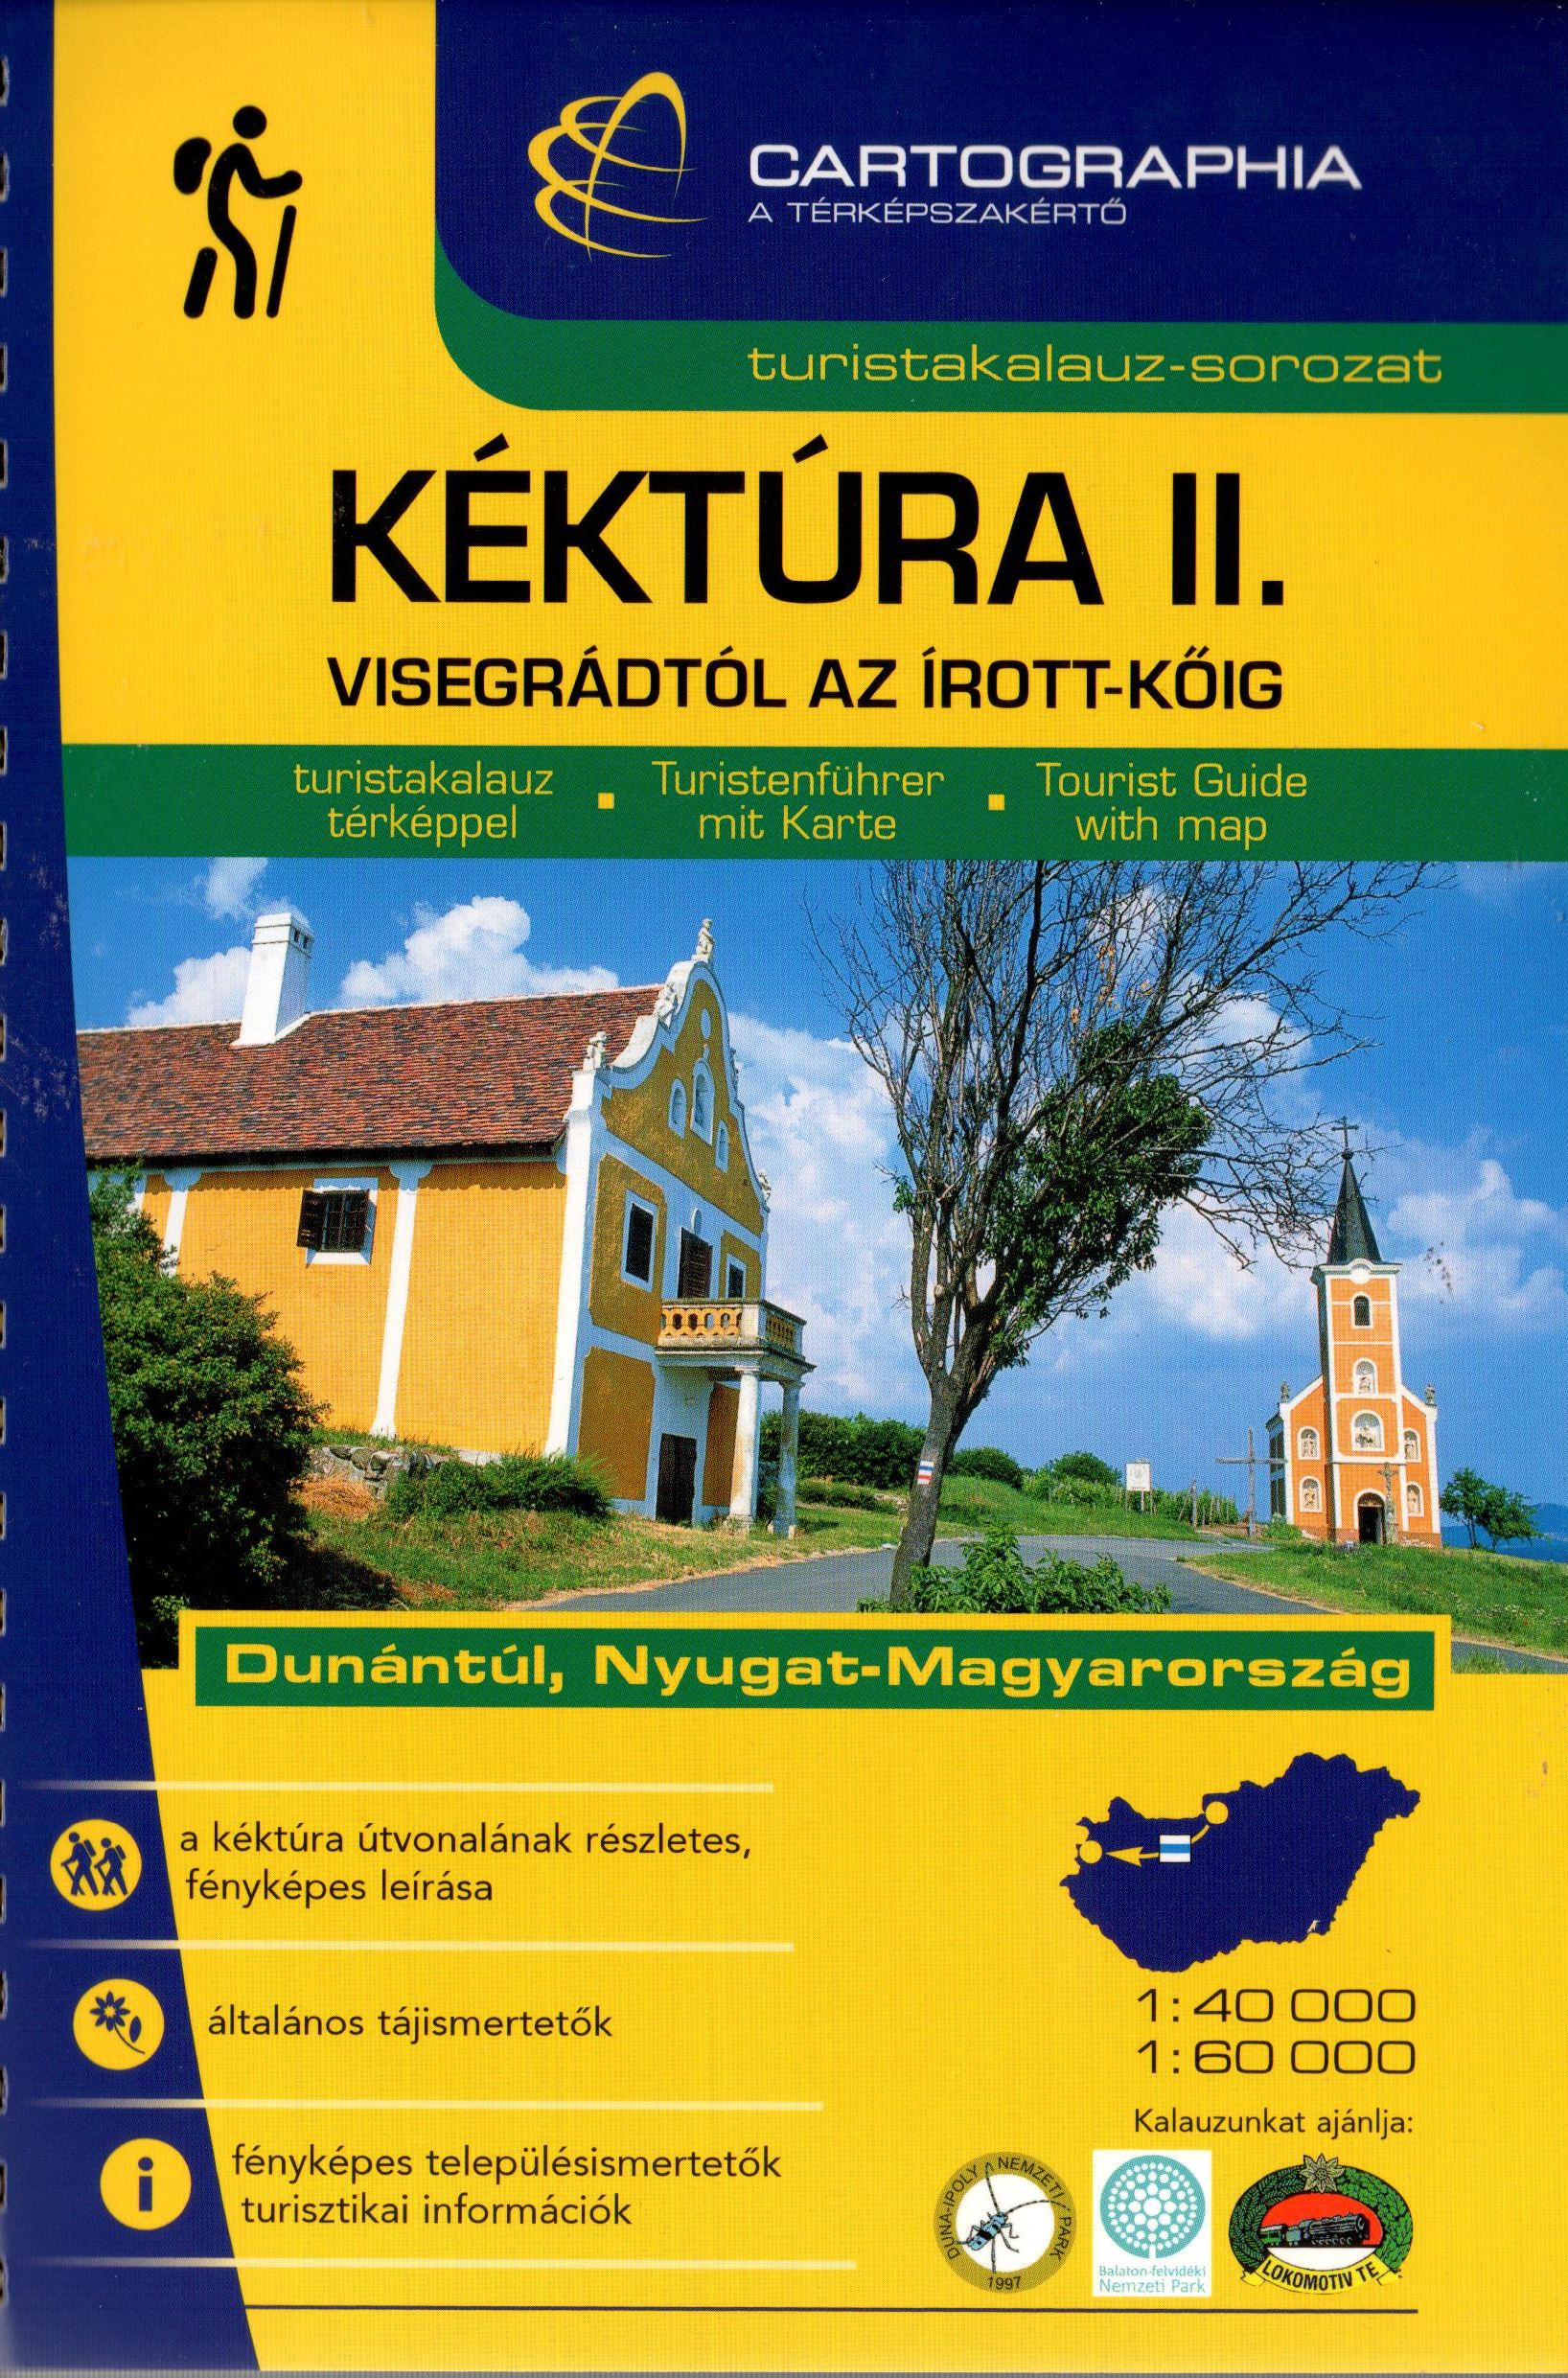 NW-Hungary: Írottkő (Austrian border)-Visegrád. Detailed tourist info in Hungarian